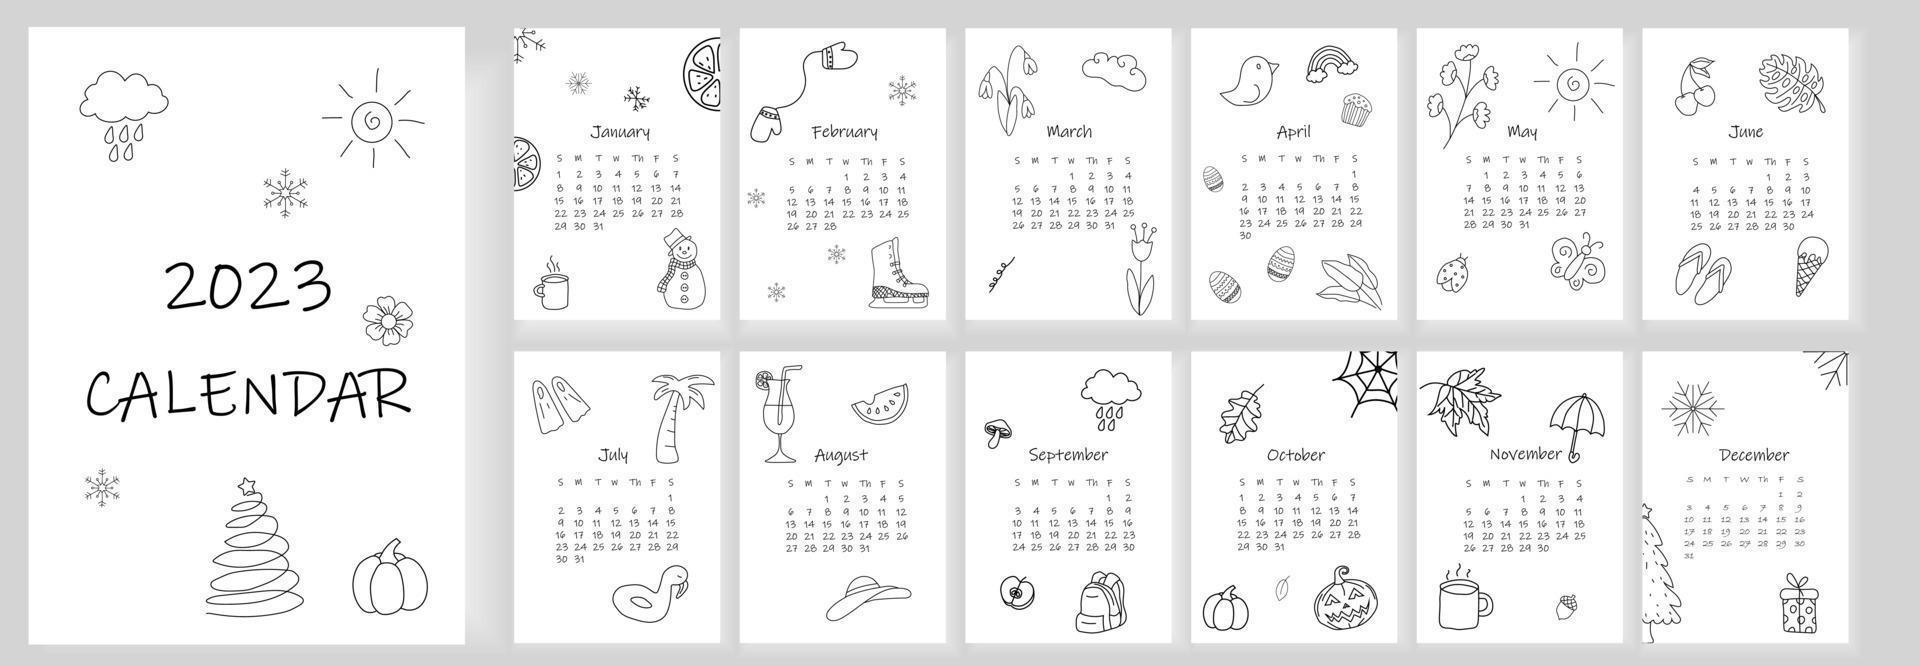 2023 calendar design. Doodle calendar planner minimal style, annual organizer. Vector illustration